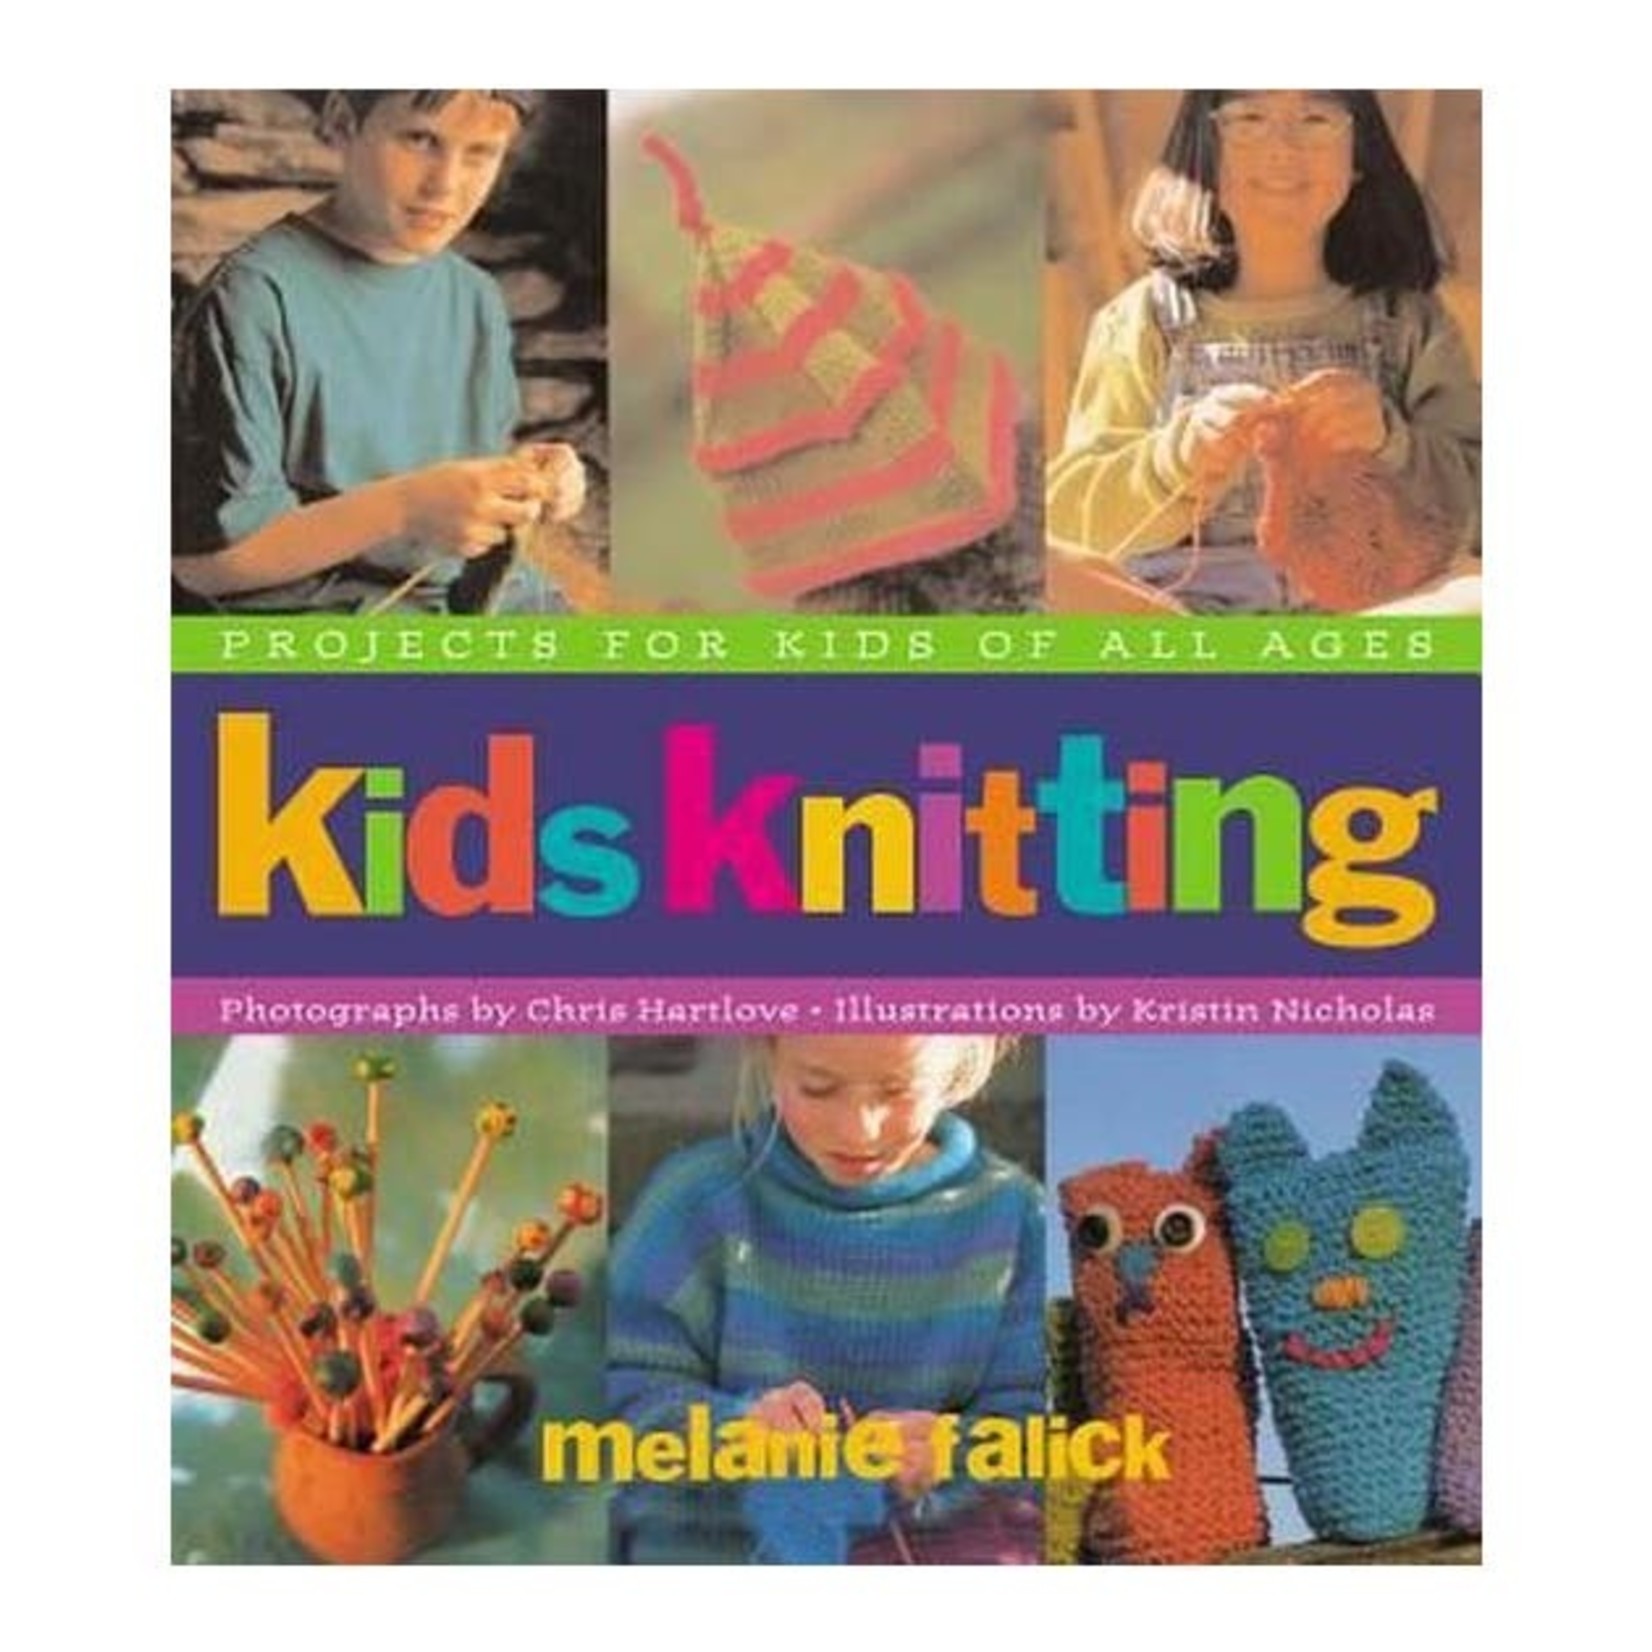 Kids Knitting by Melanie Falick